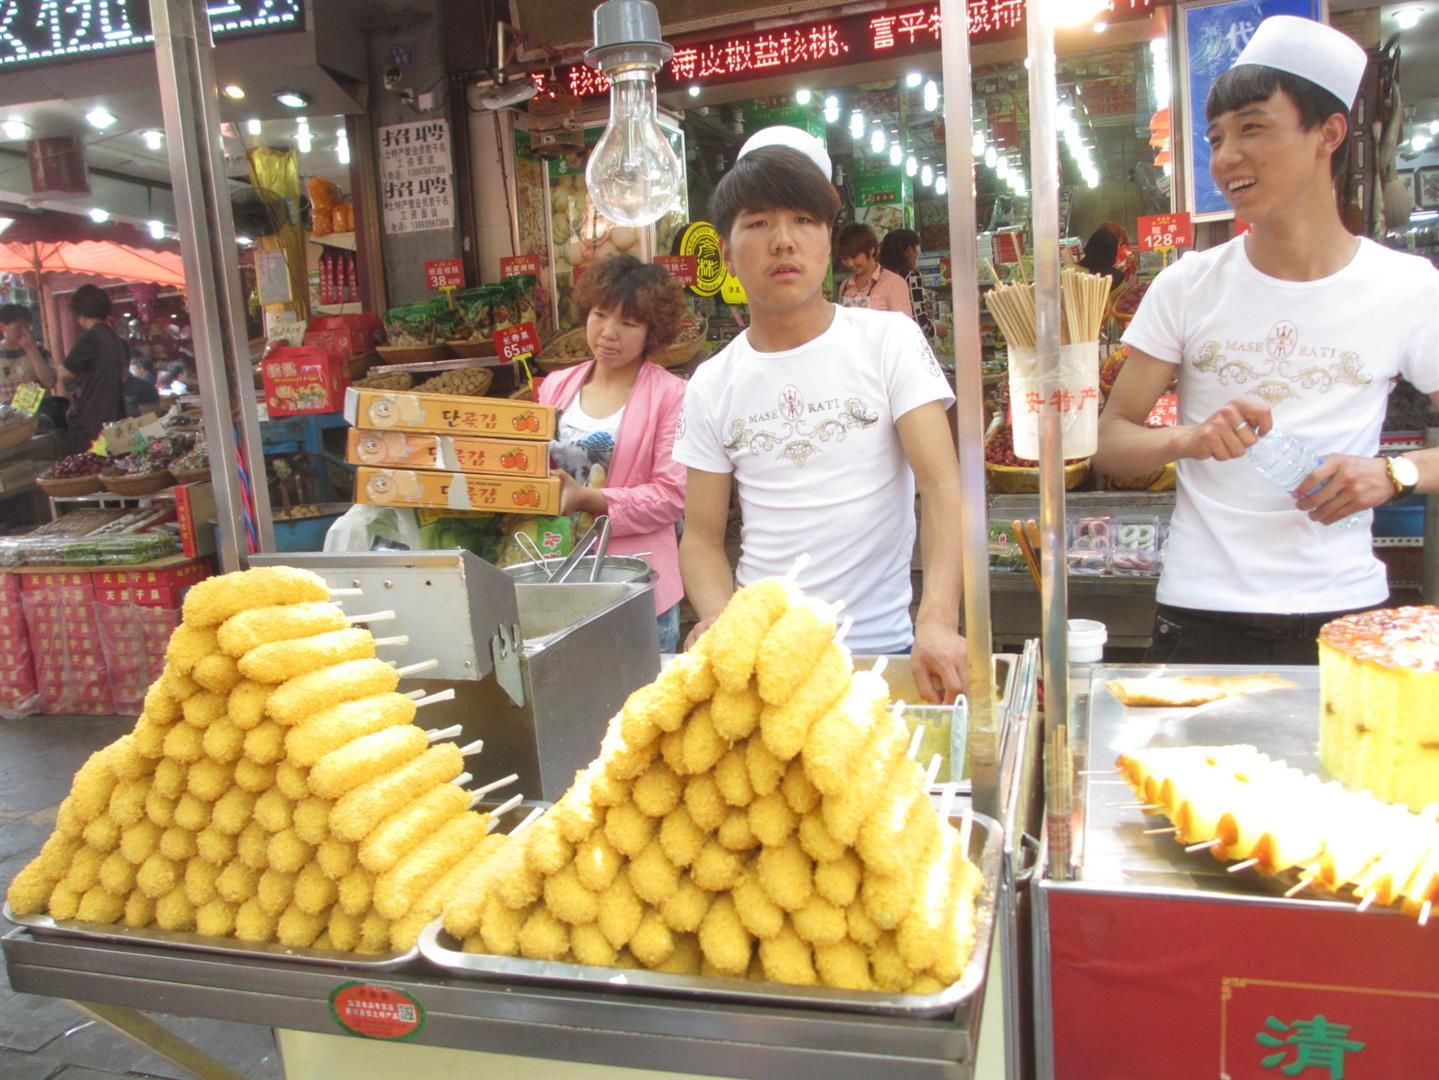  photo Chinese-market-Xian-fried-banana_zps82bcrhco.jpg